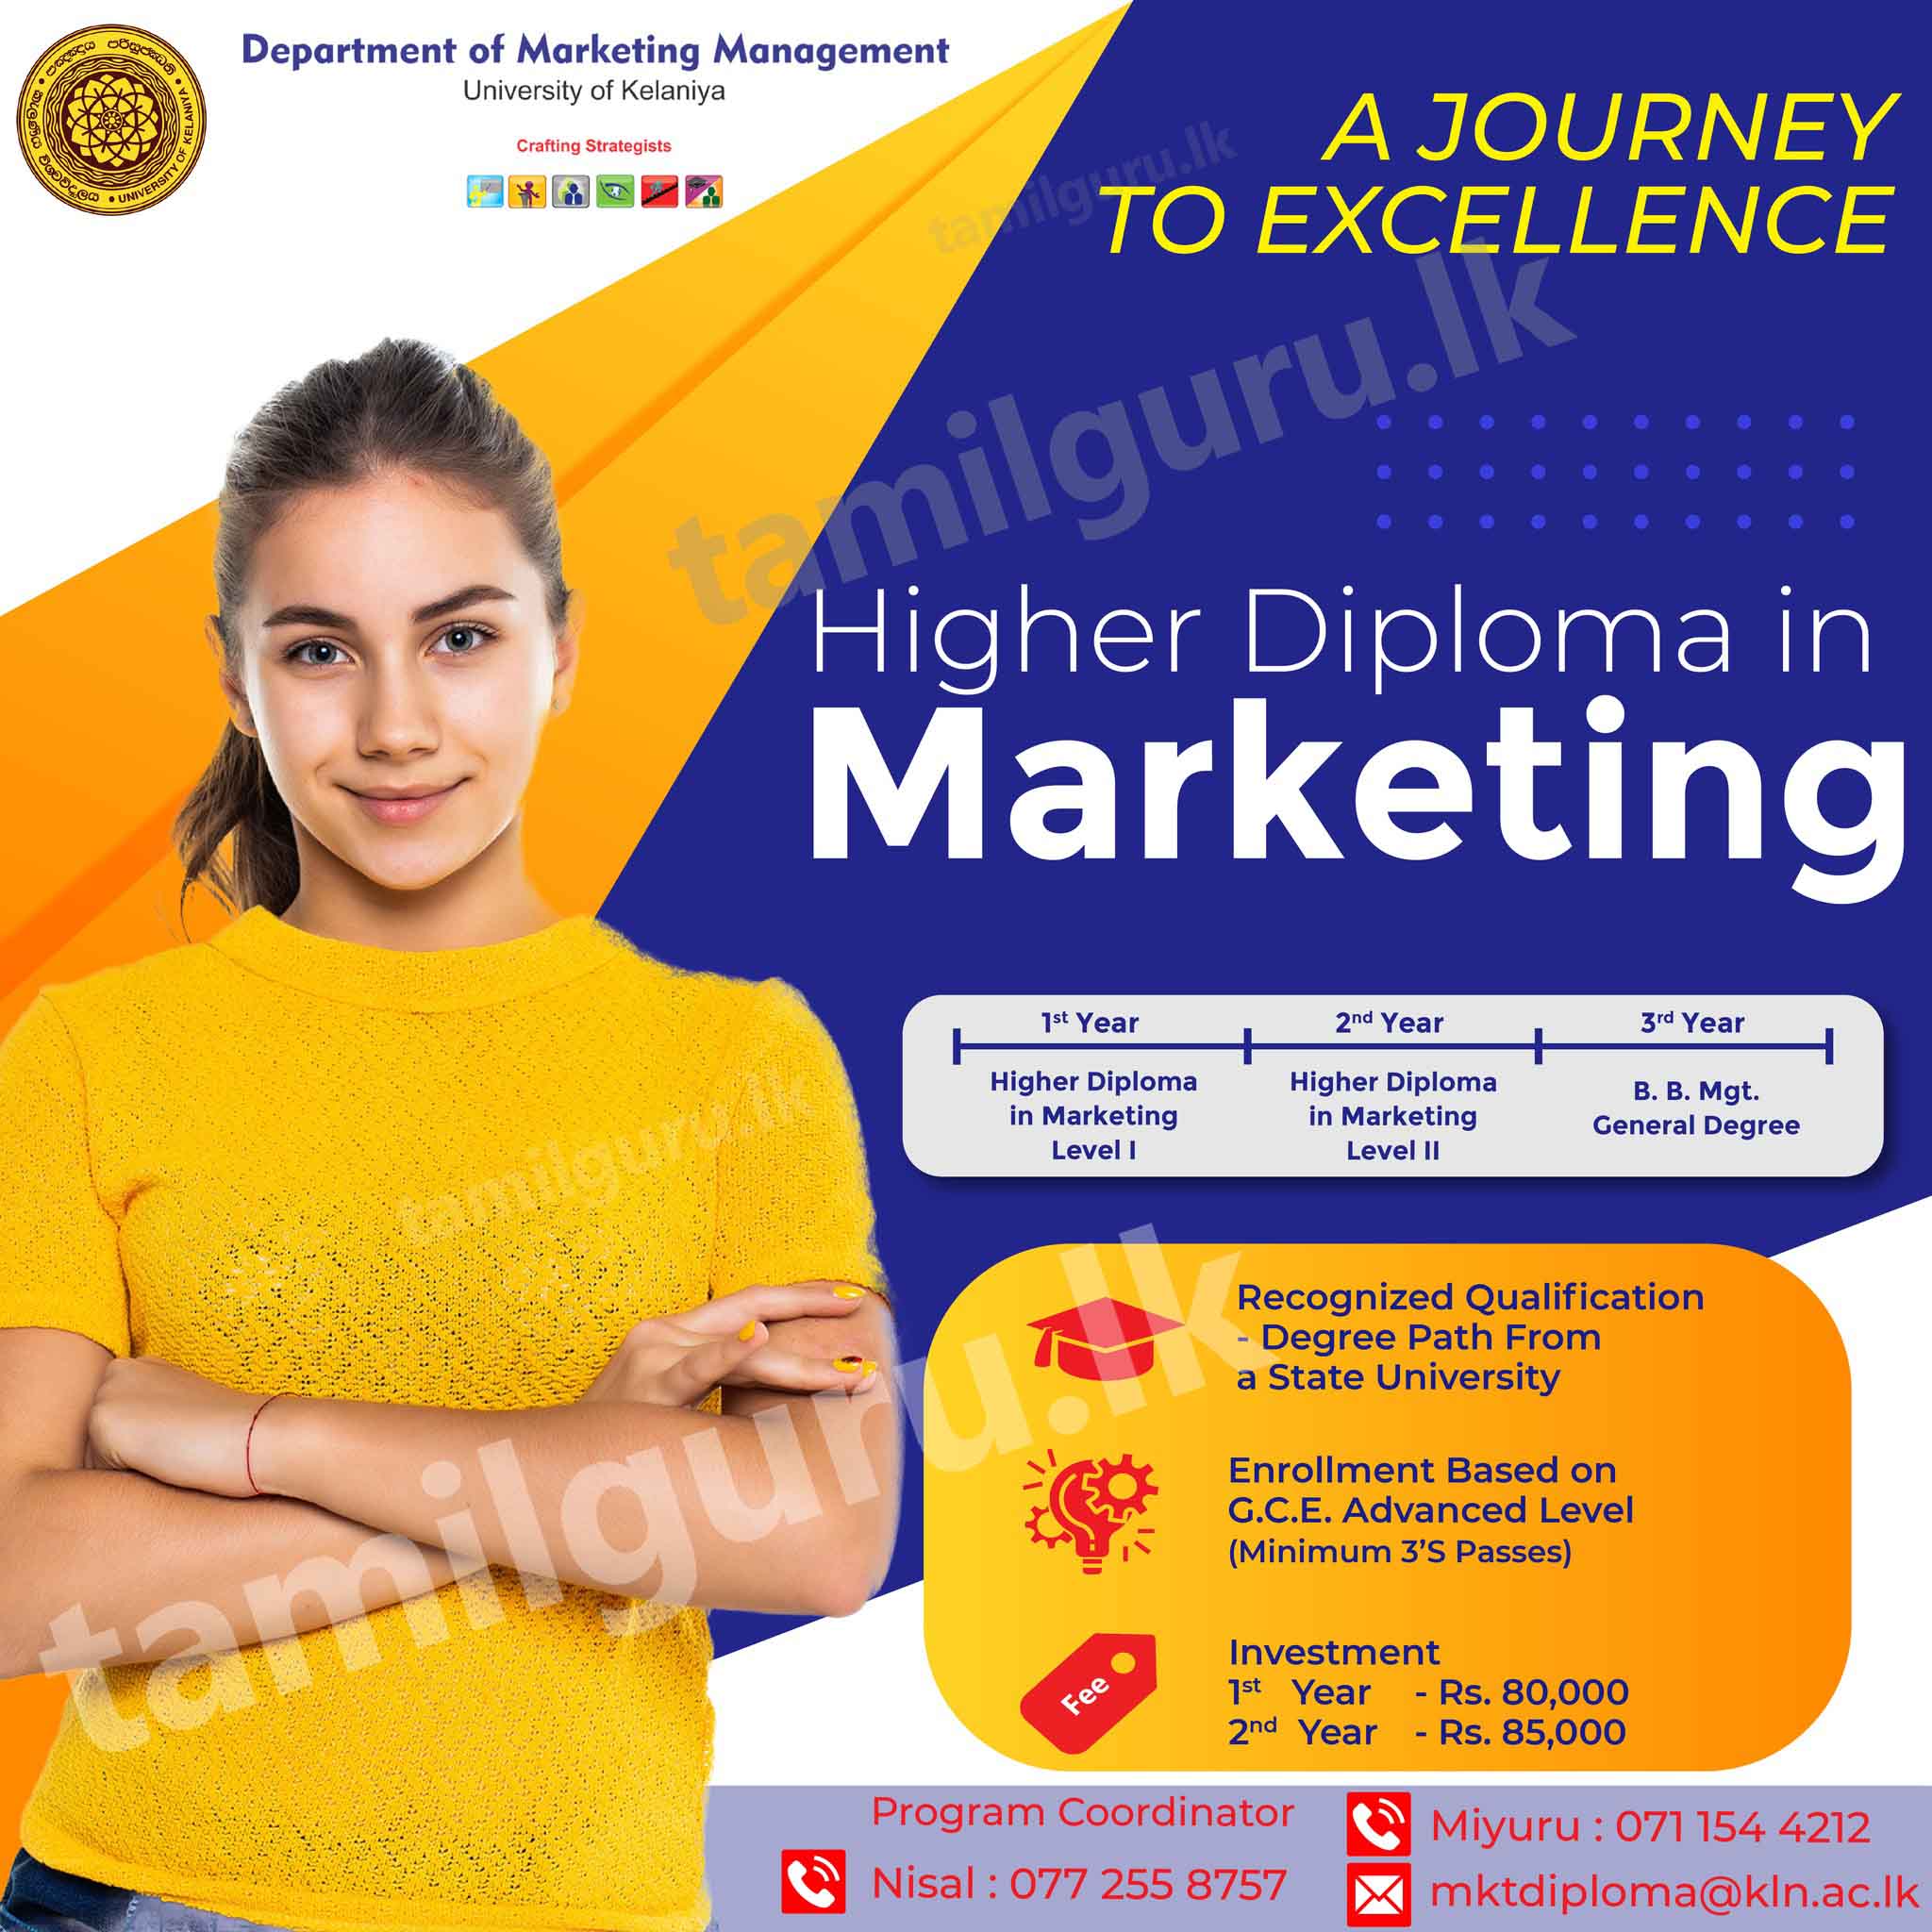 Diploma / Higher Diploma in Marketing  (HDM) Programme 2022/2023 - University of Kelaniya